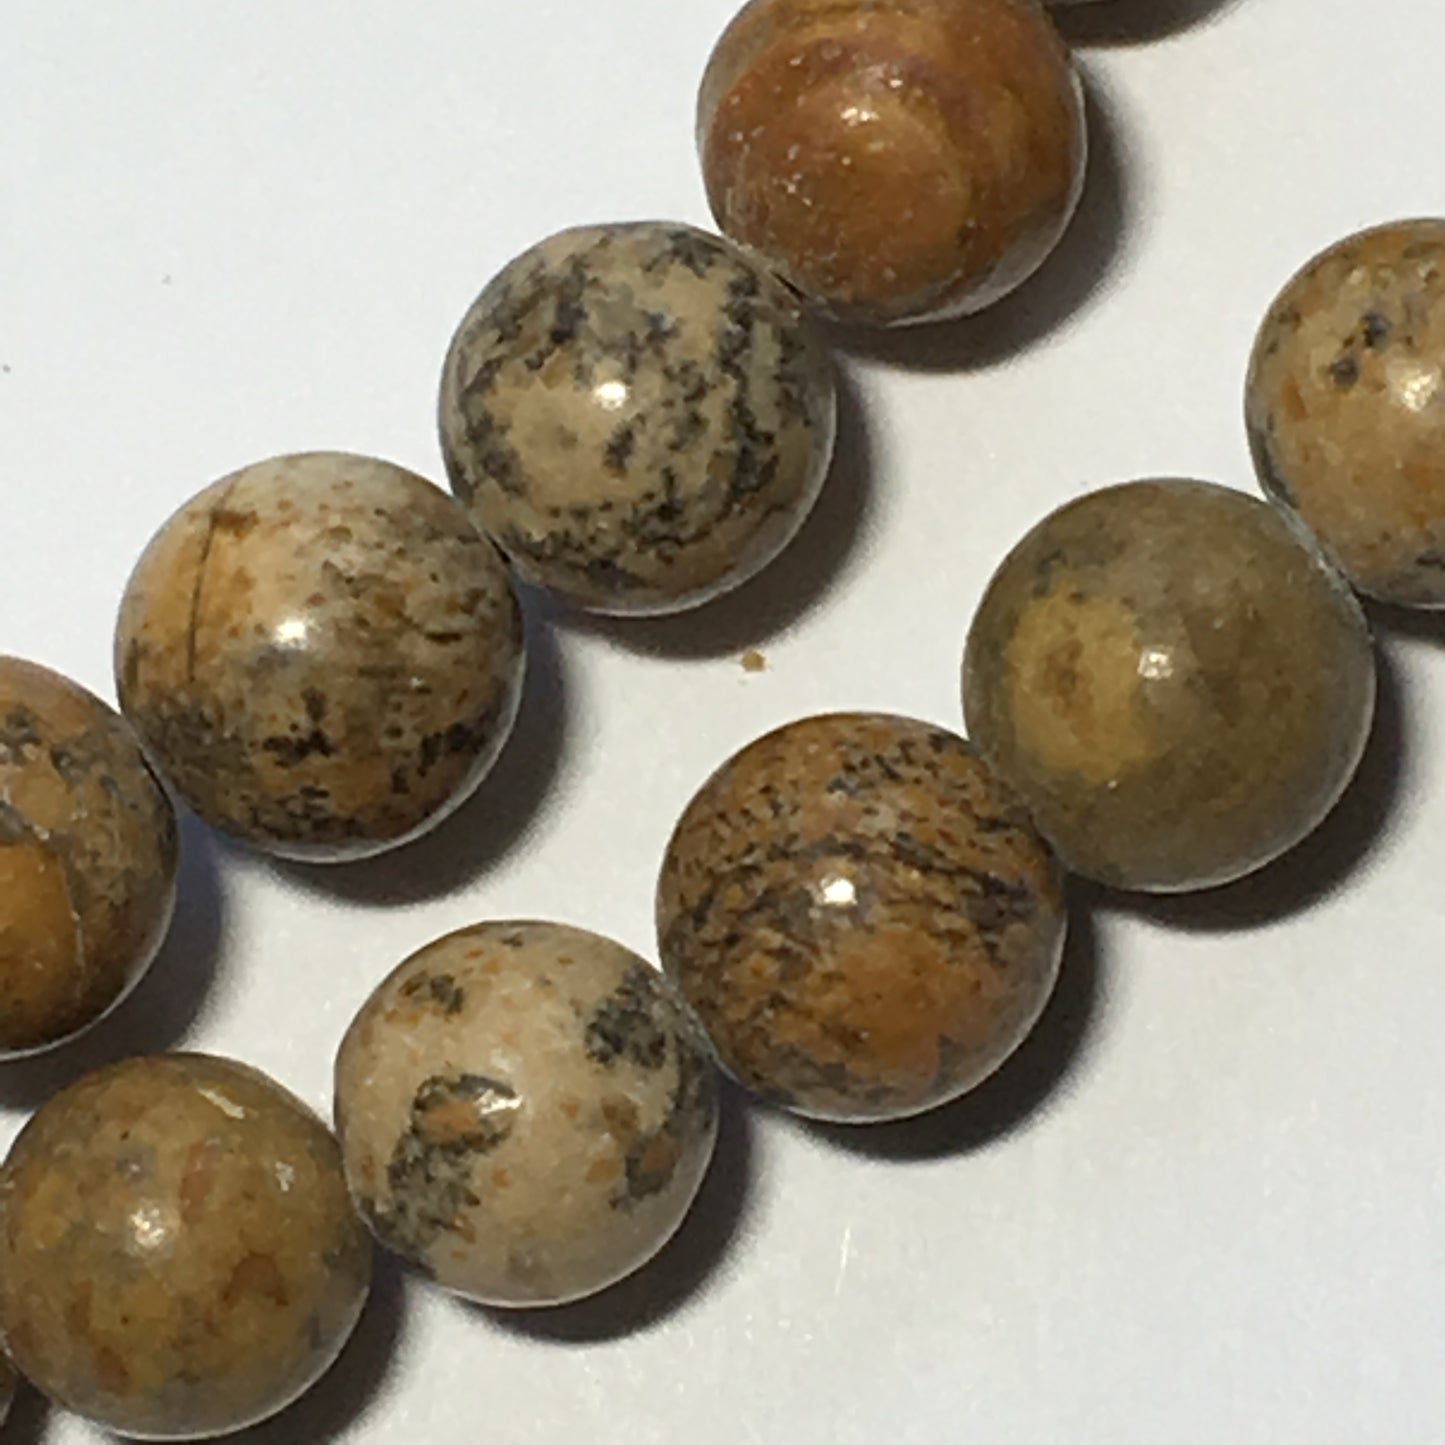 Map Stone Round Semi-Precious Stone Beads, 8 mm - 49 Beads